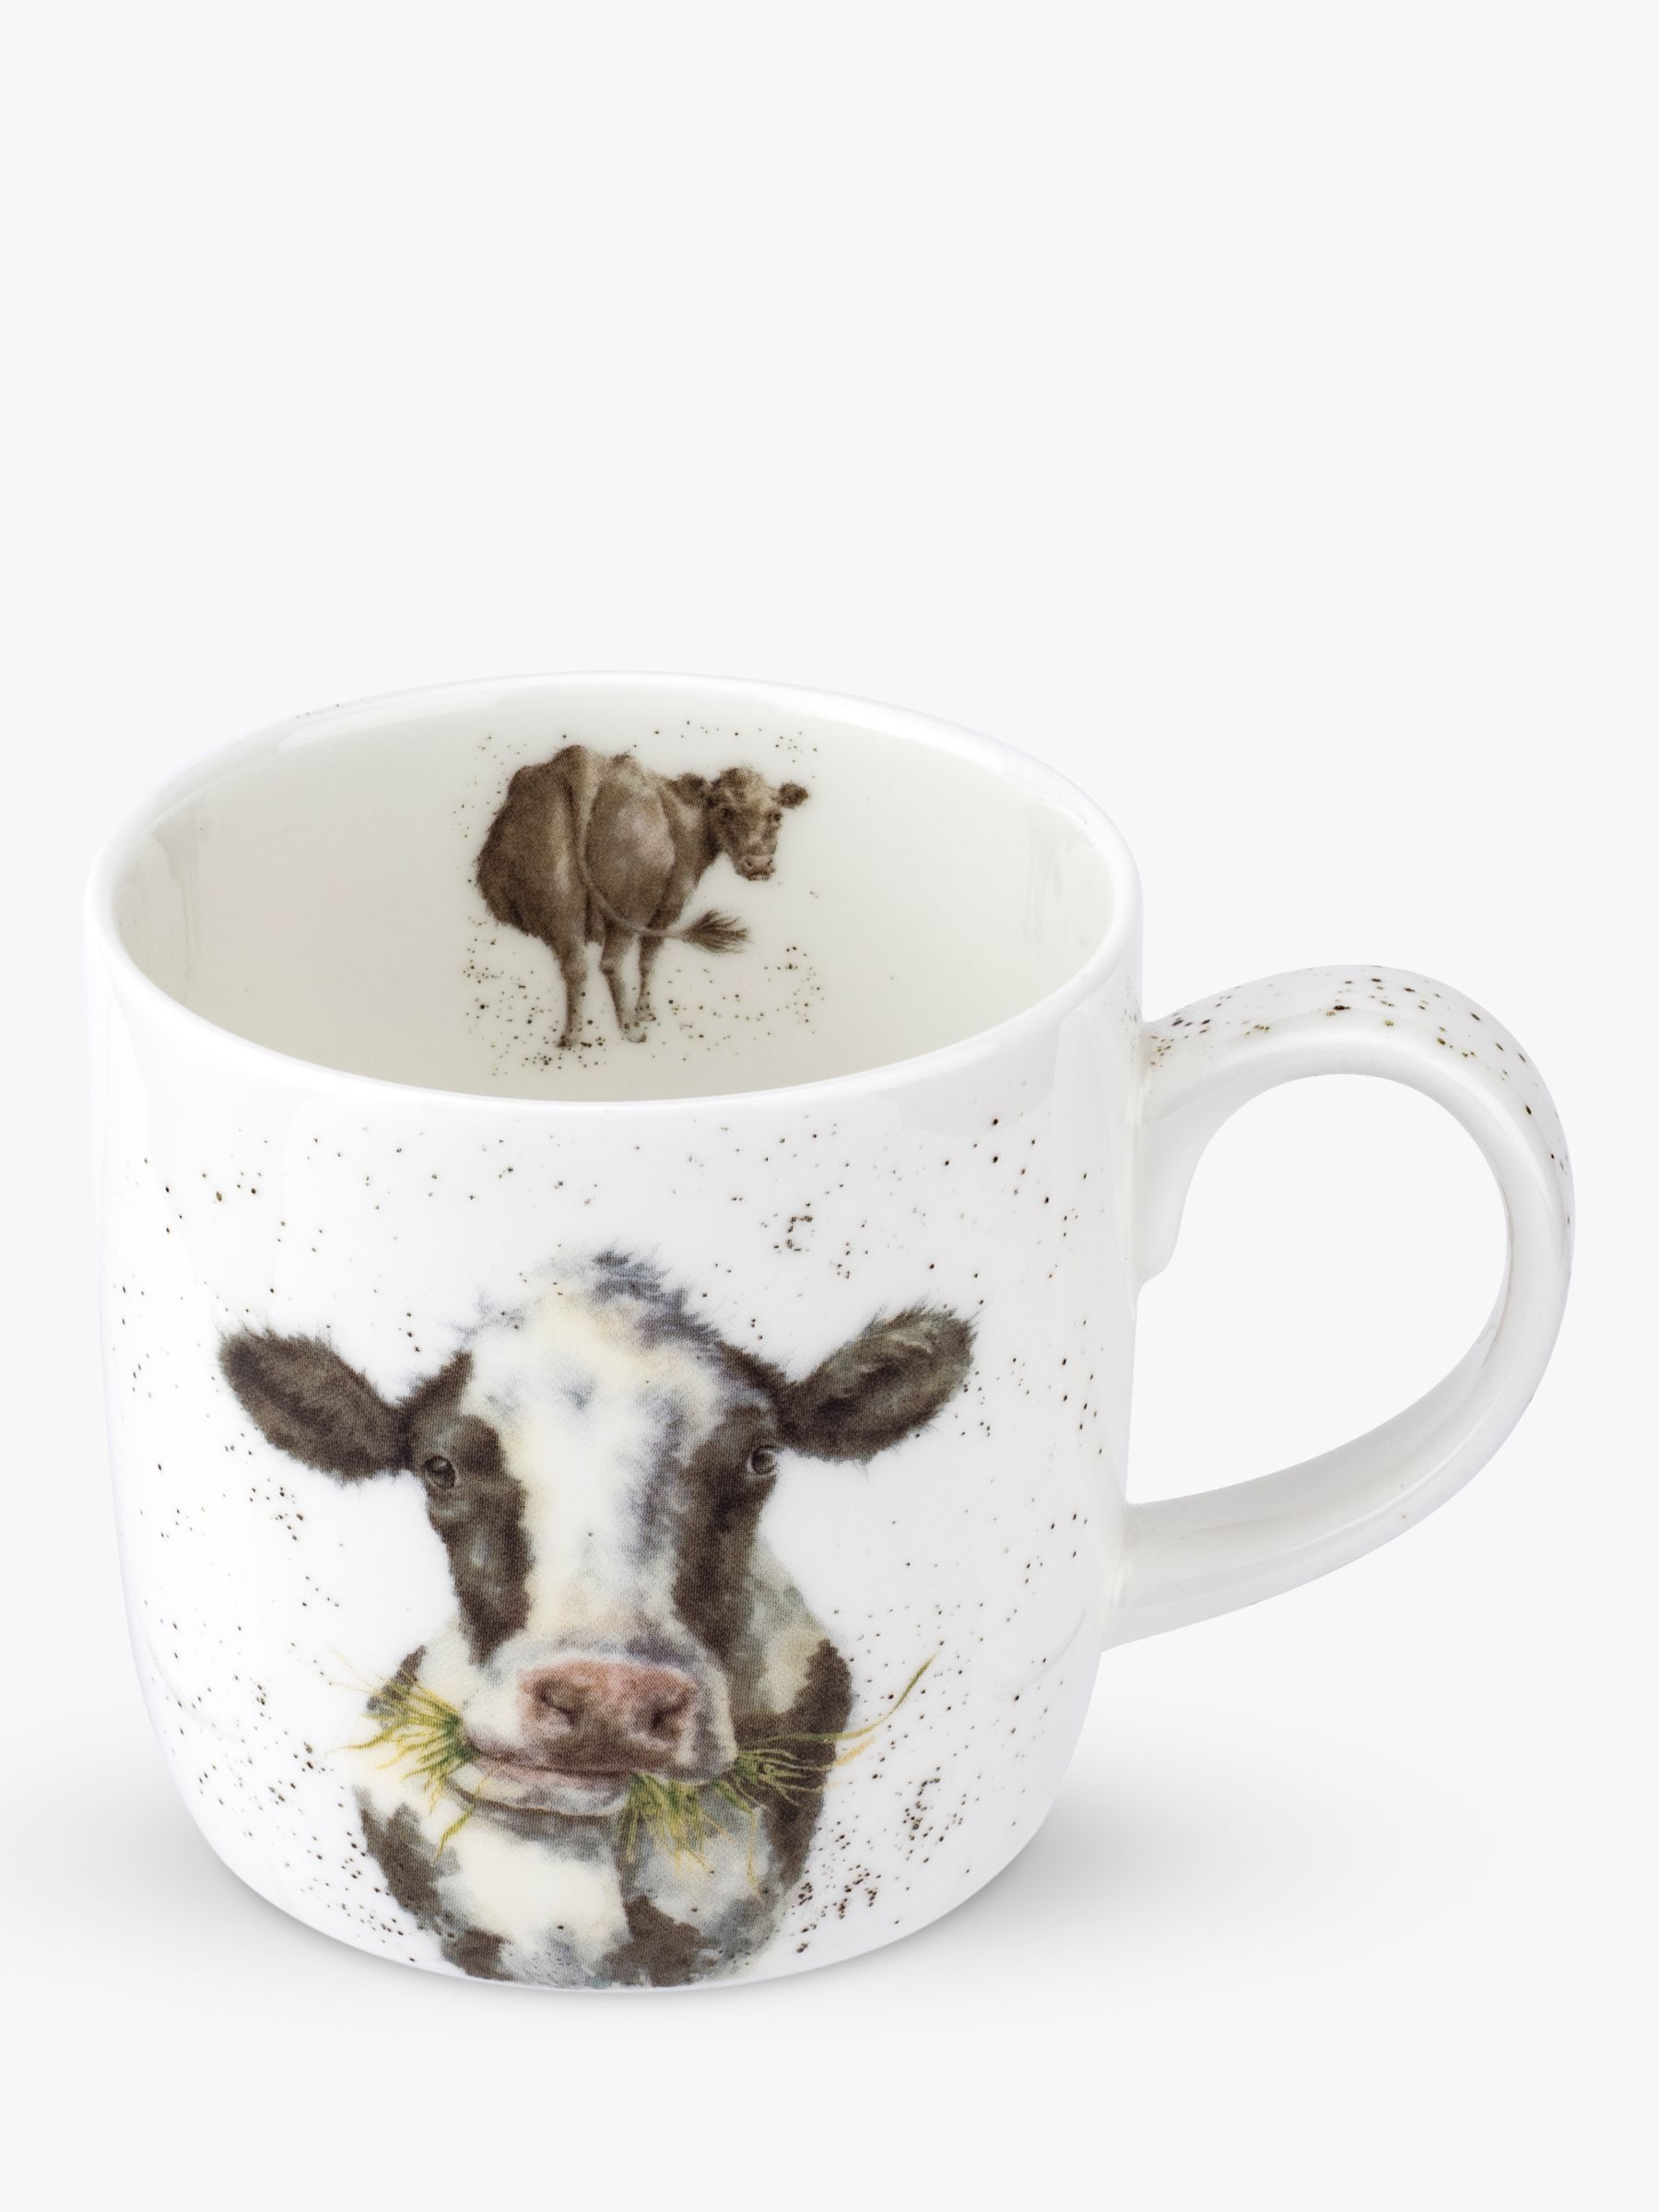 Pig  Oink Fine Bone China Mug Cup Beaker also comes in sheep & Cow